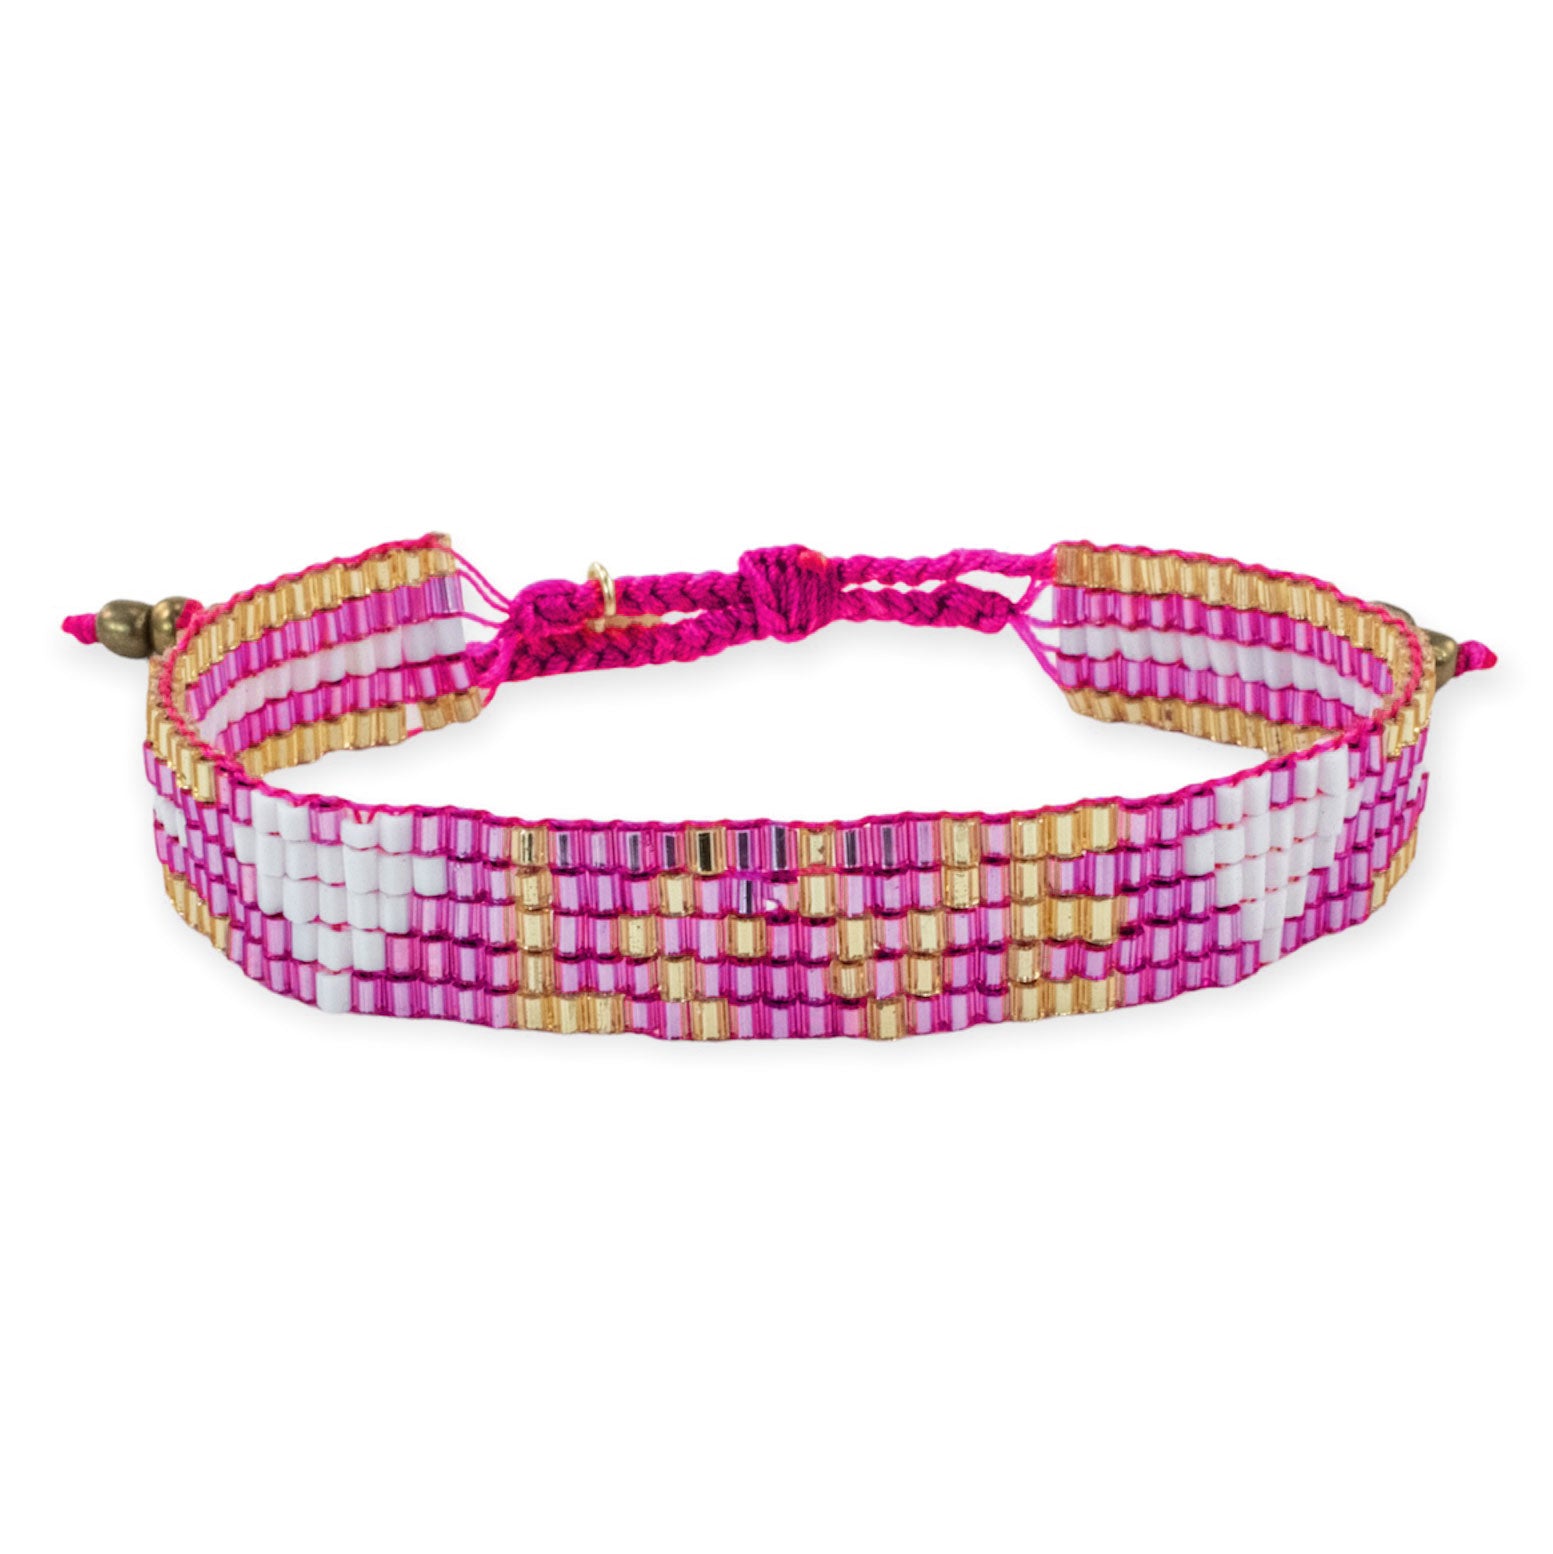 Boho Chic 4-Strand Melon & Seed Bead Bracelet Kit (Pink Rose) –